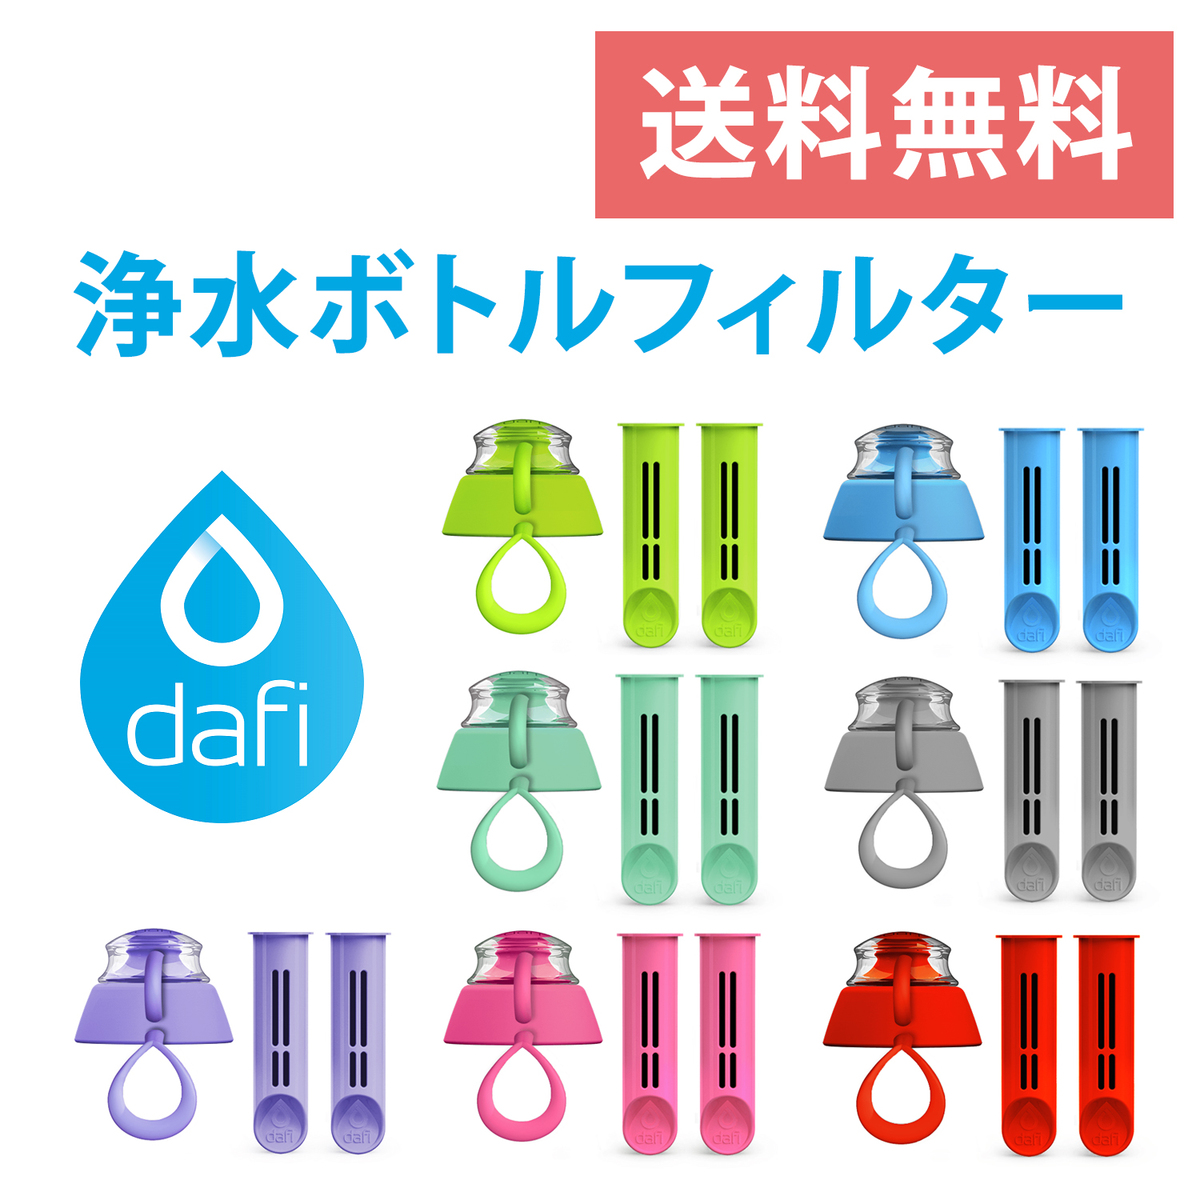 DAFI ダフィ 浄水ボトル用の交換用カートリッジです。 DAFI ダフィ 浄水ボトル用 浄水 ろ過 フィルター 活性炭 カートリッジ2個 + キャップ1個入り ポーランド製 キャンプ アウトドア サステナブル サスティナブル エスディージーズ SDGs